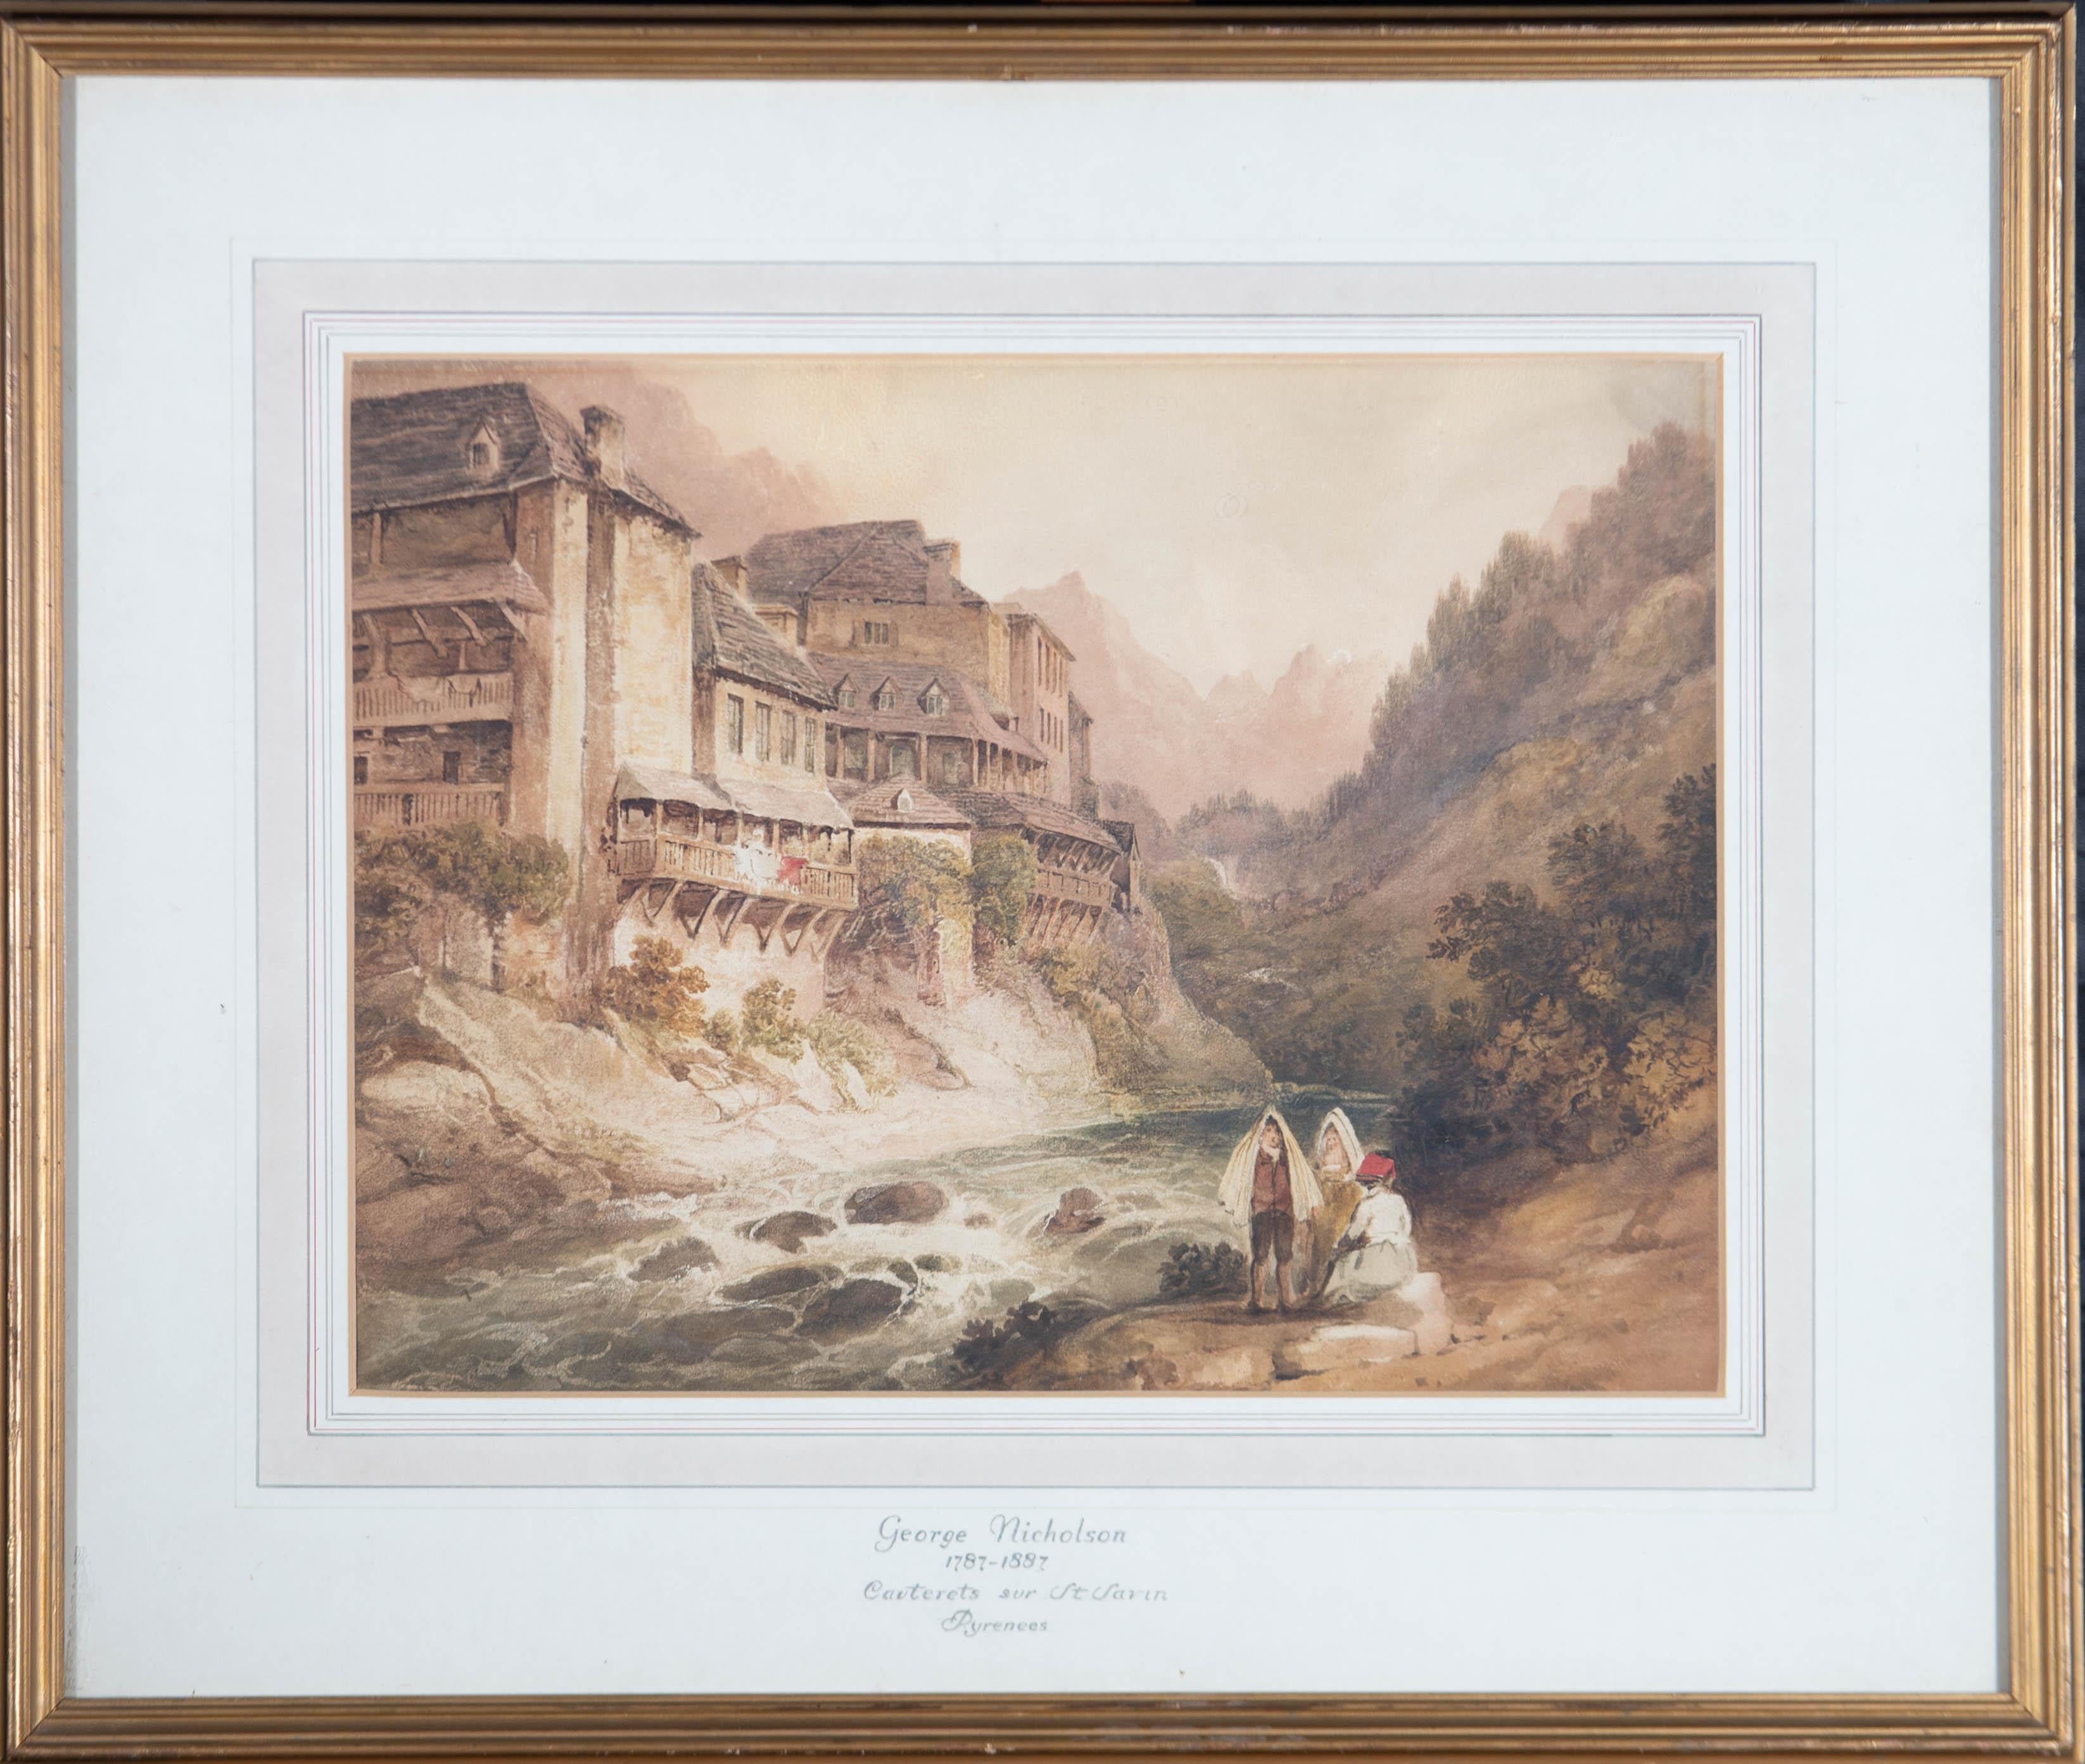 Attrib. George Nicholson Landscape Art - Attrib. G. Nicholson (1787-1878) - Watercolour, Cauterets sur St Savin, Pyrenees